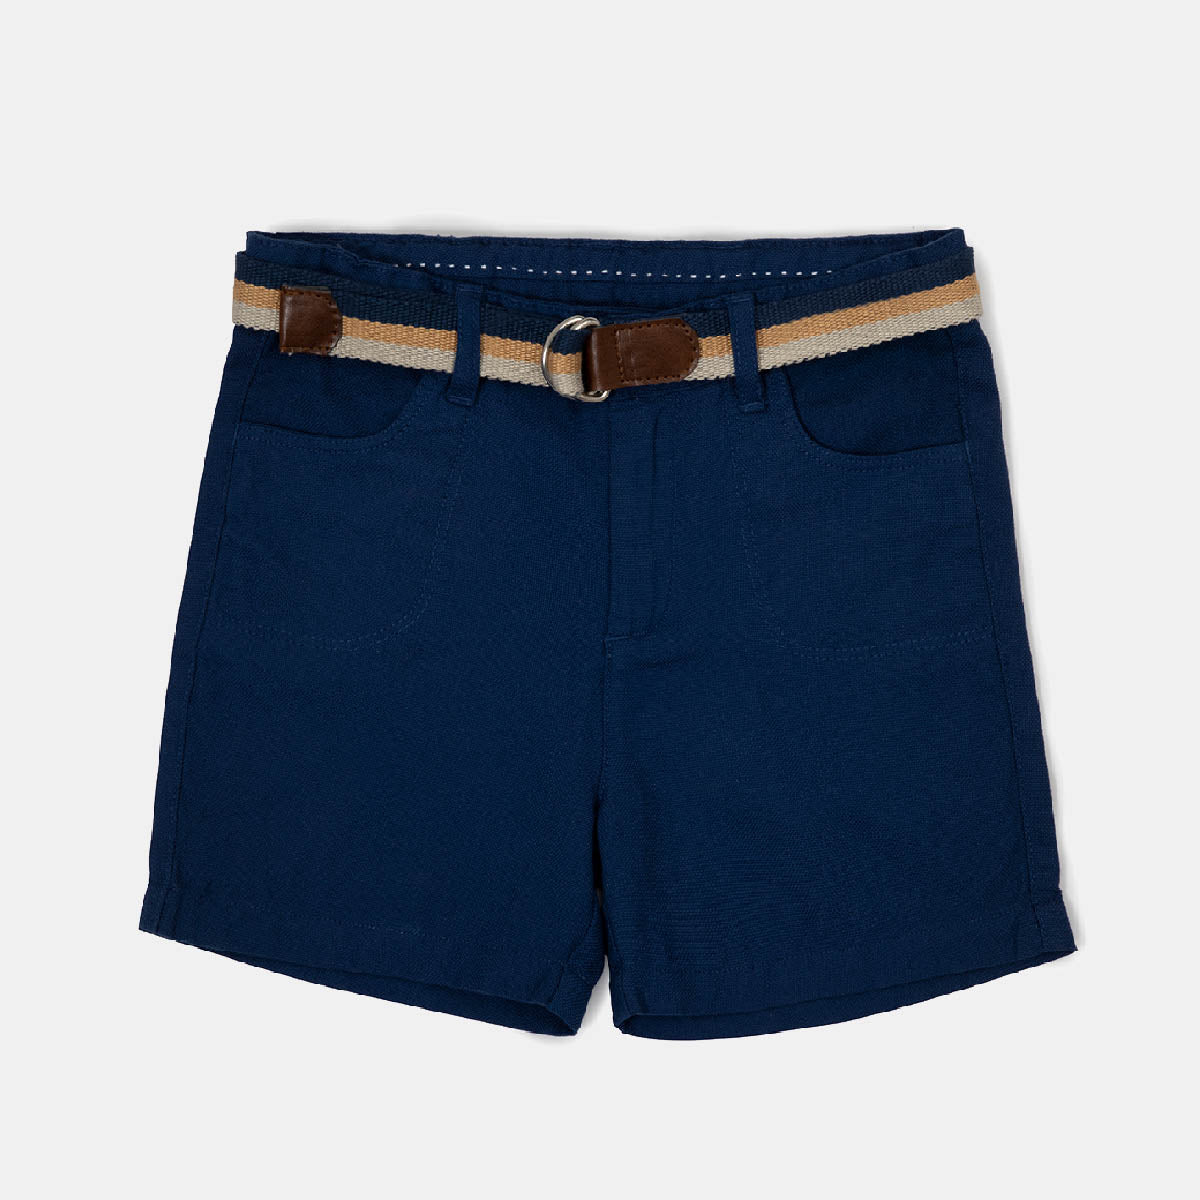 Deep Blue Oxford Shorts with Adjustable Belt